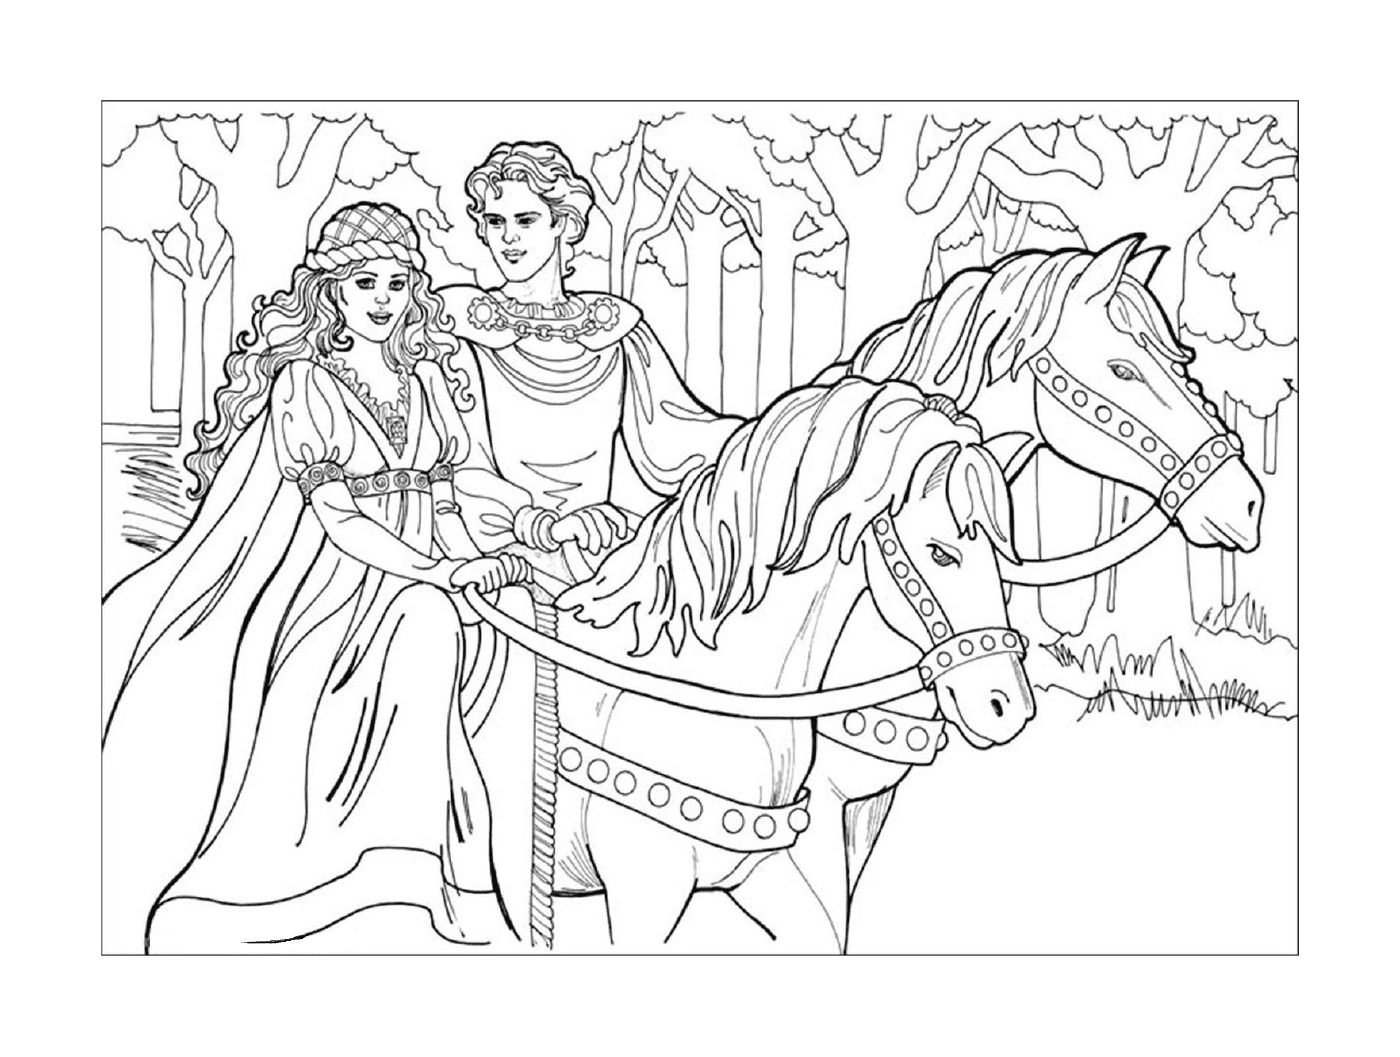  Disney Princess, a couple on a horse-drawn carriage 